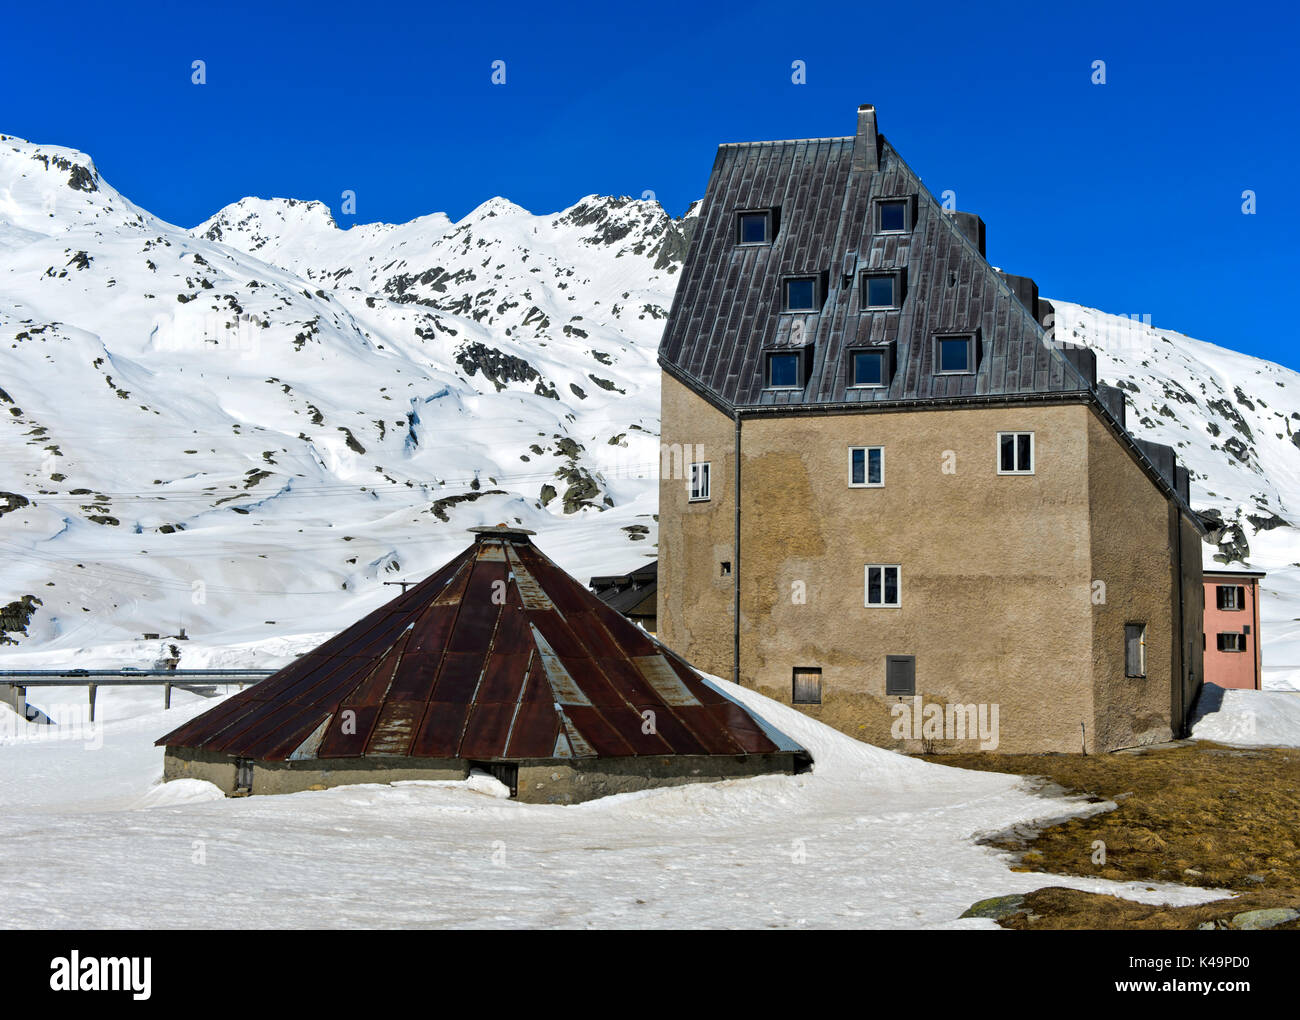 St Gotthard Hospice, European Heritage, St Gotthard Pass, Airolo, Canton Of Ticino, Switzerland Stock Photo